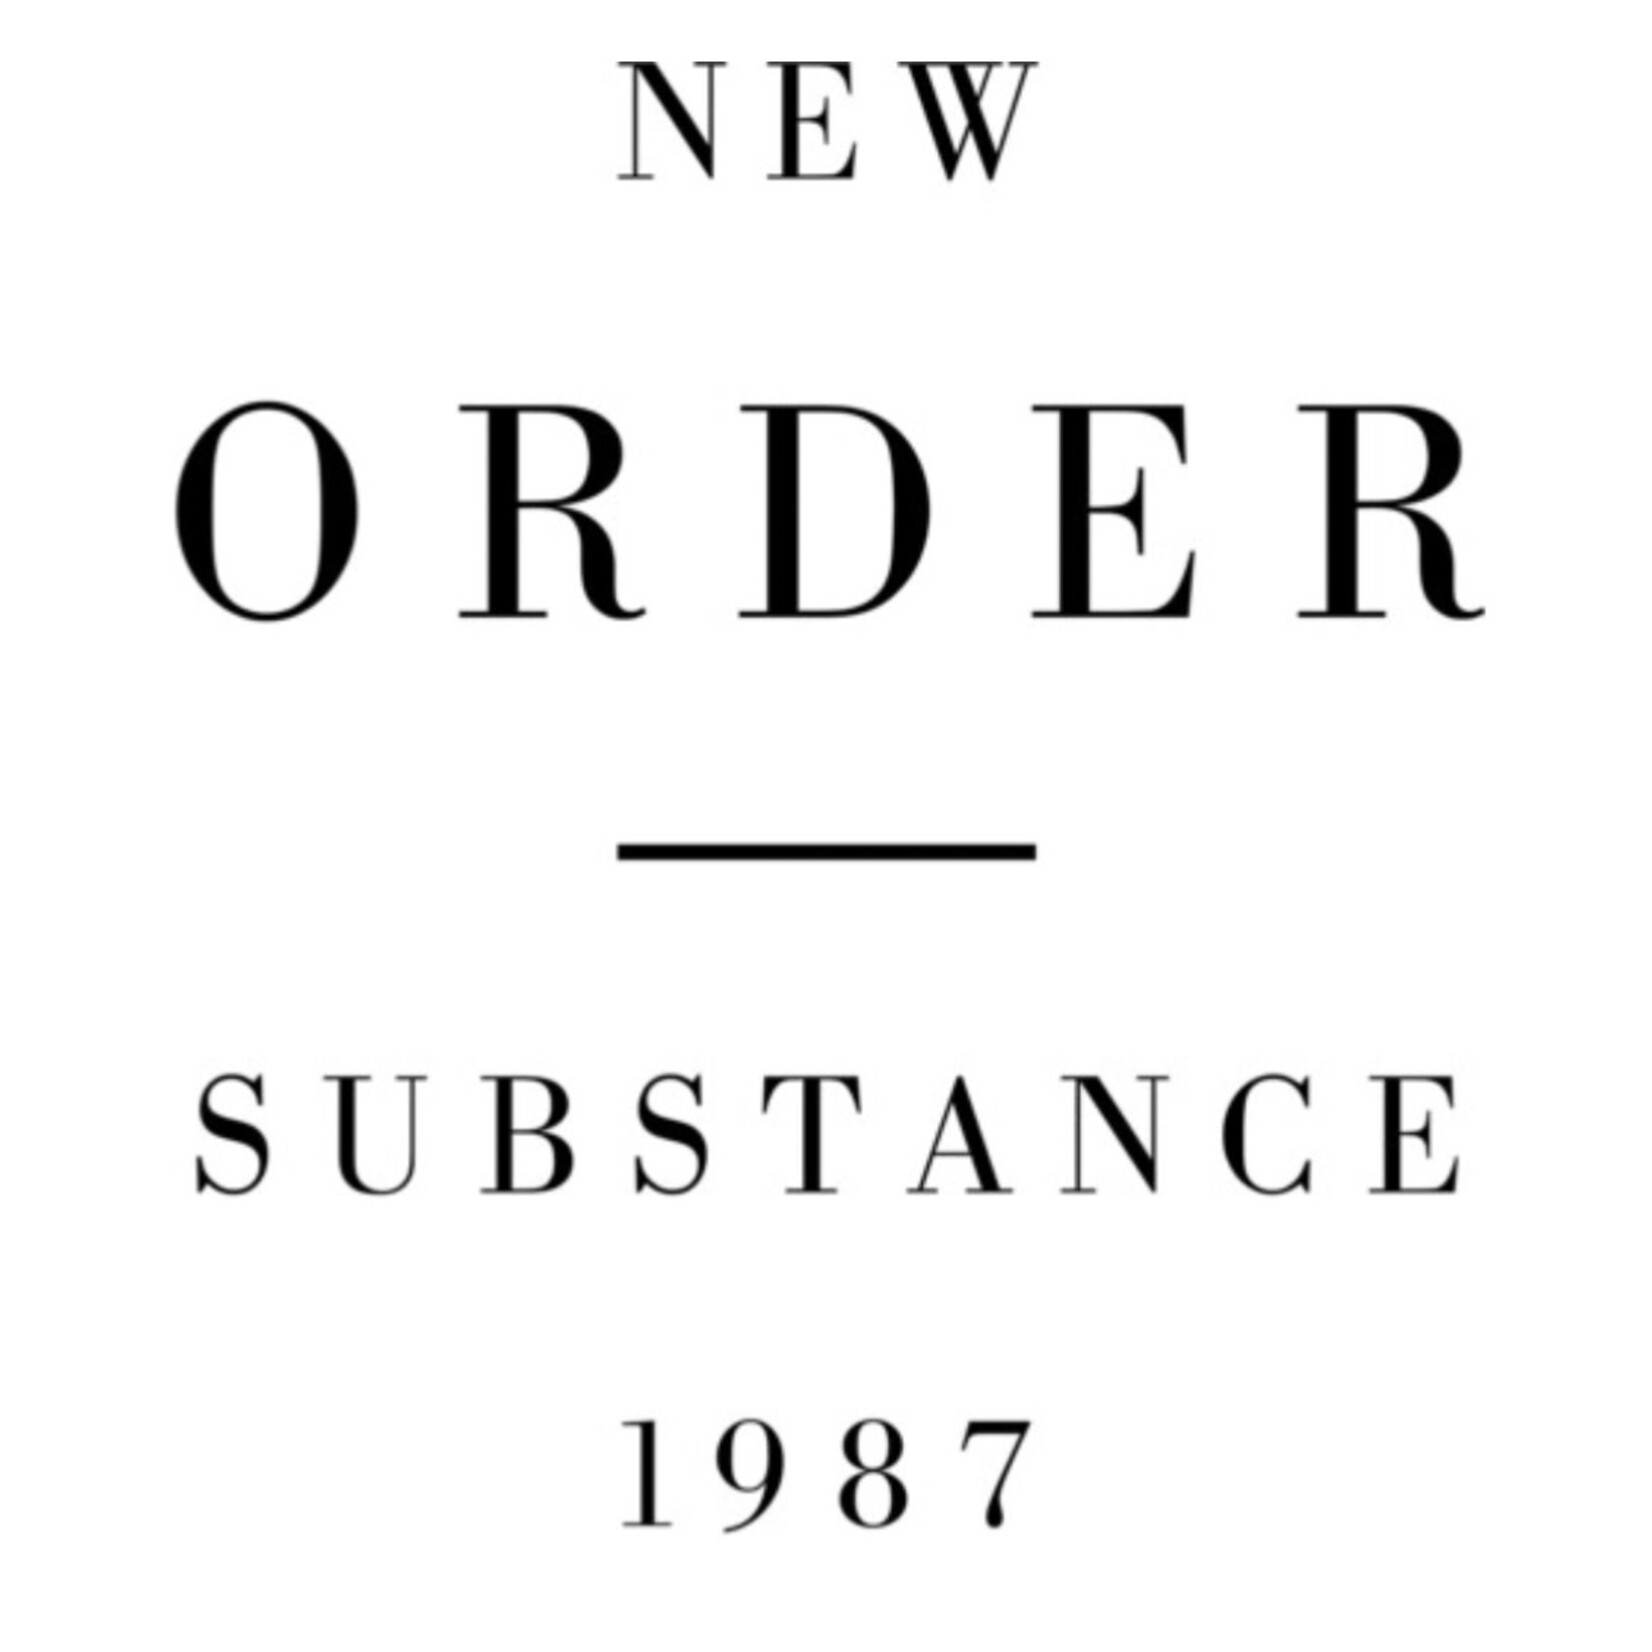 New Order - Substance 1987 - WB25621A - Vinyl LP (NEW)